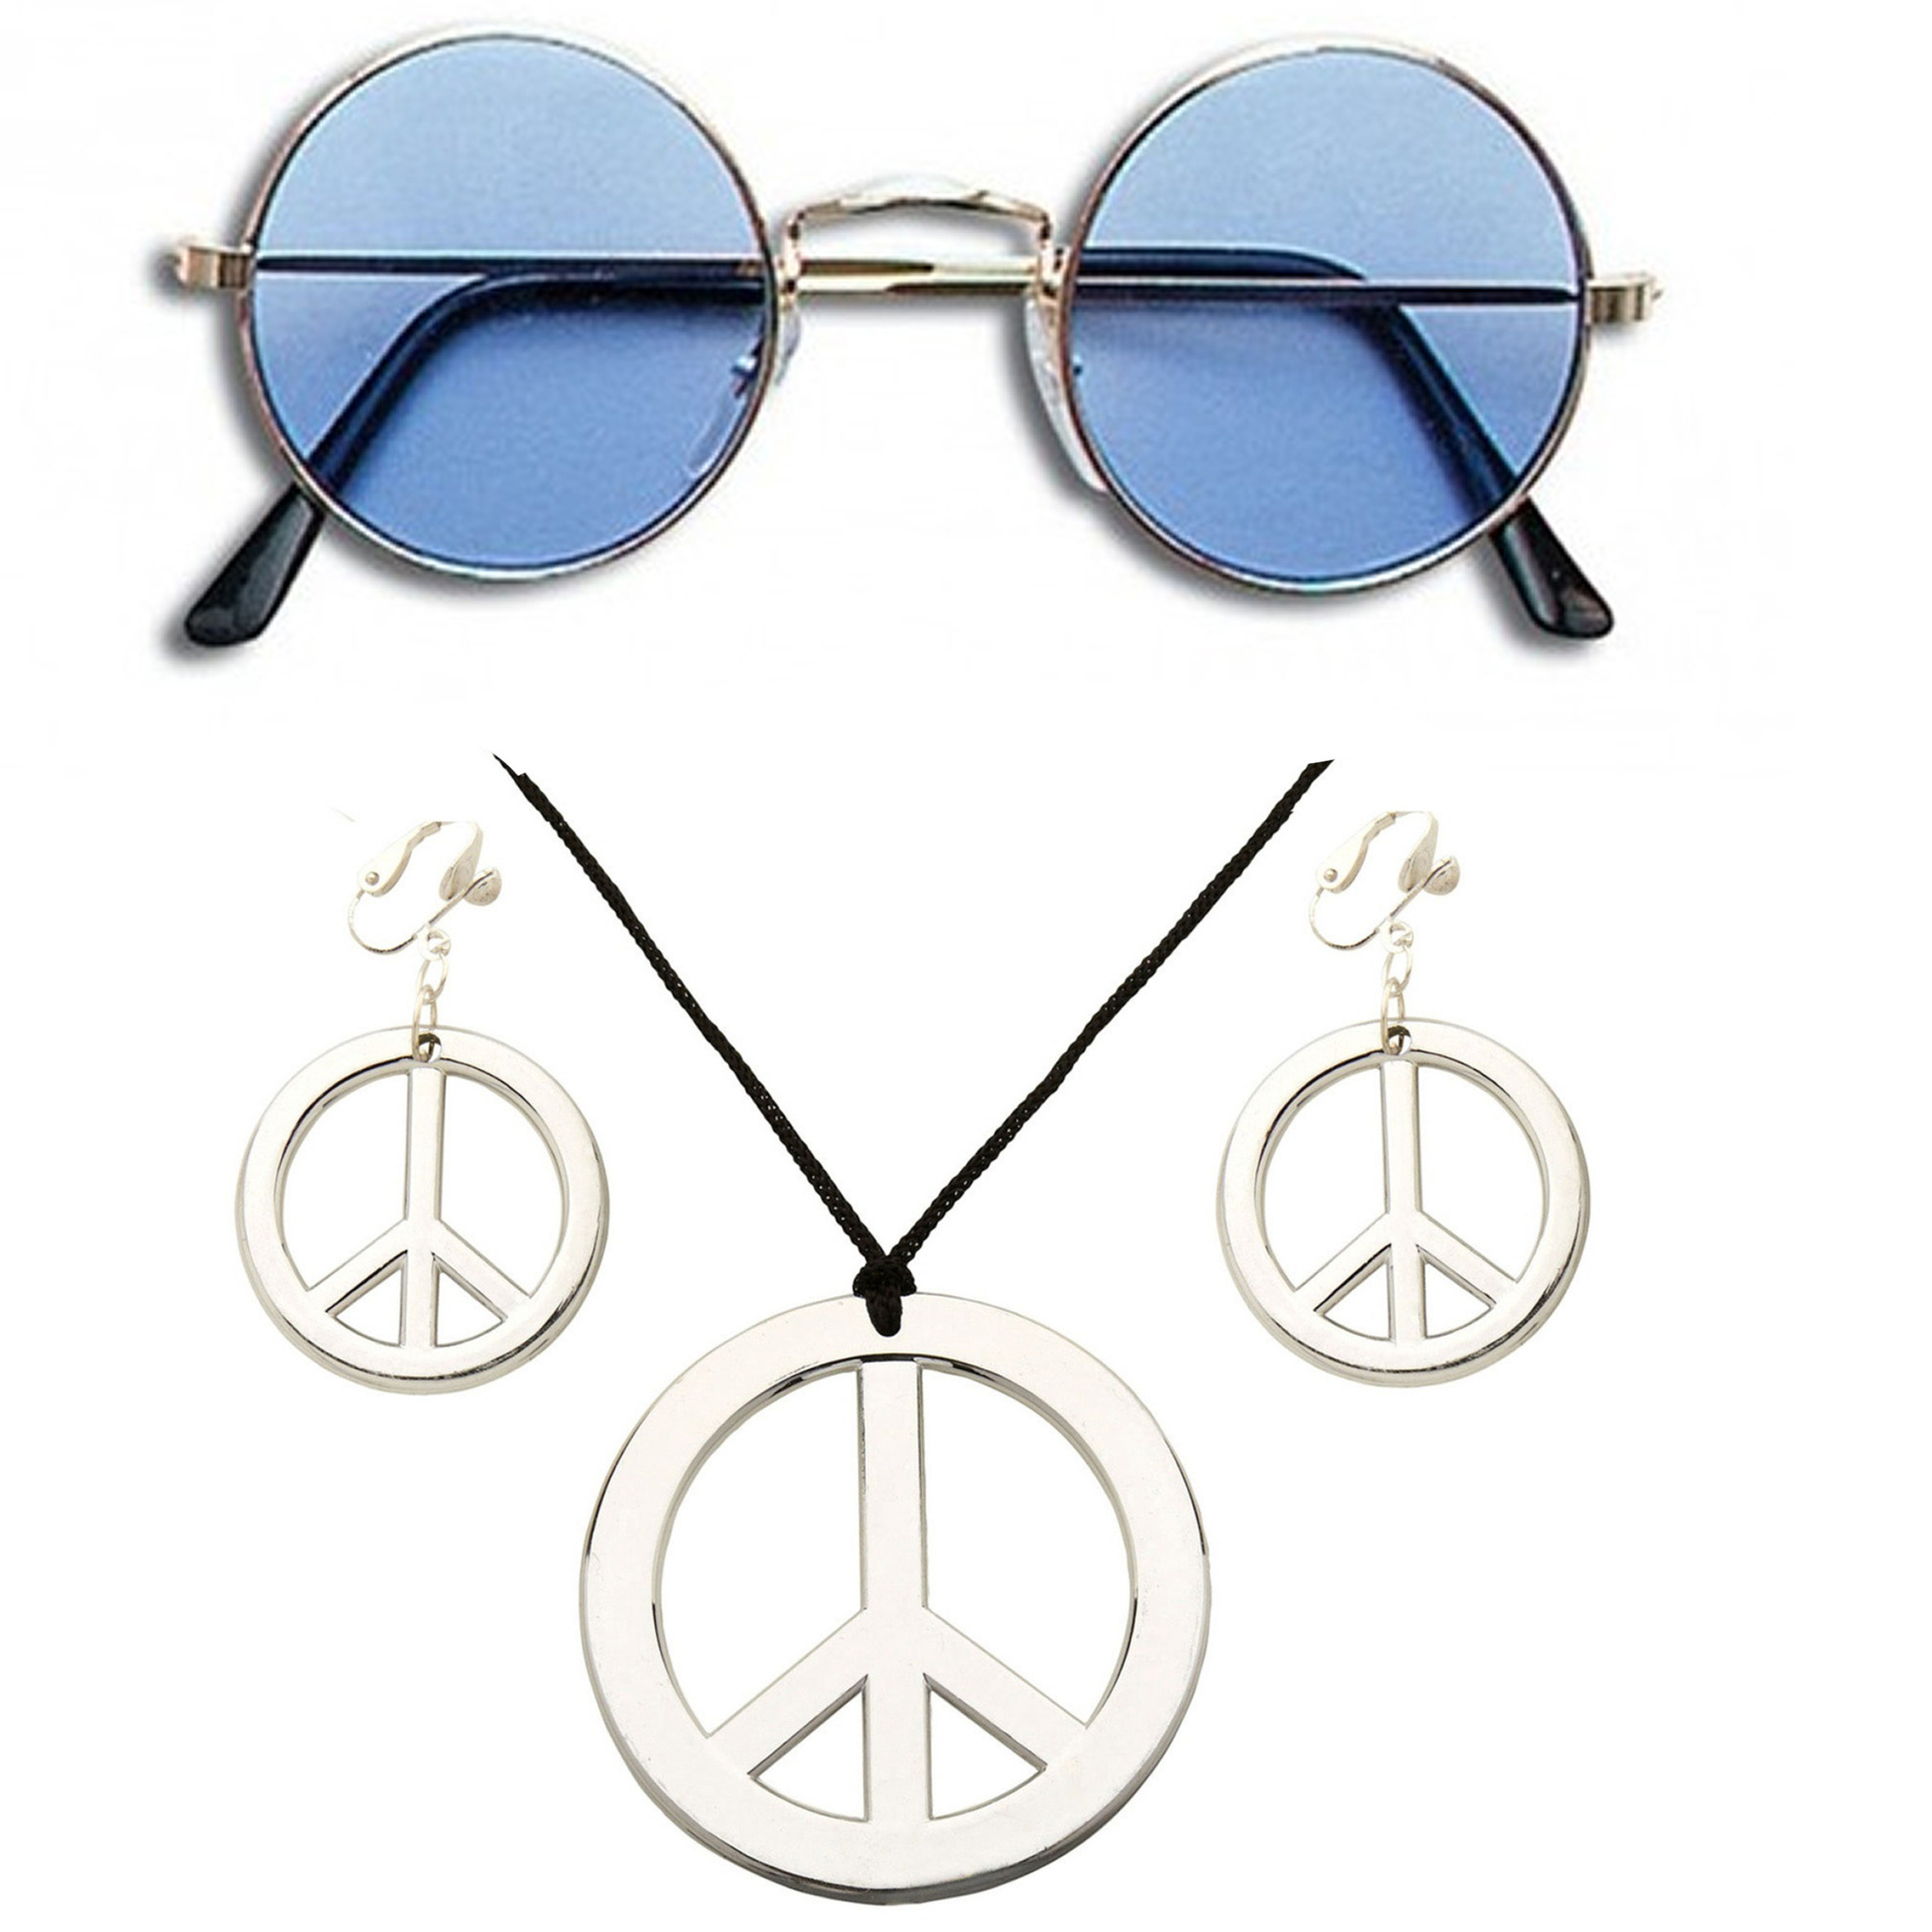 Toppers Hippie Flower Power Sixties verkleed sieraden met blauwe party bril